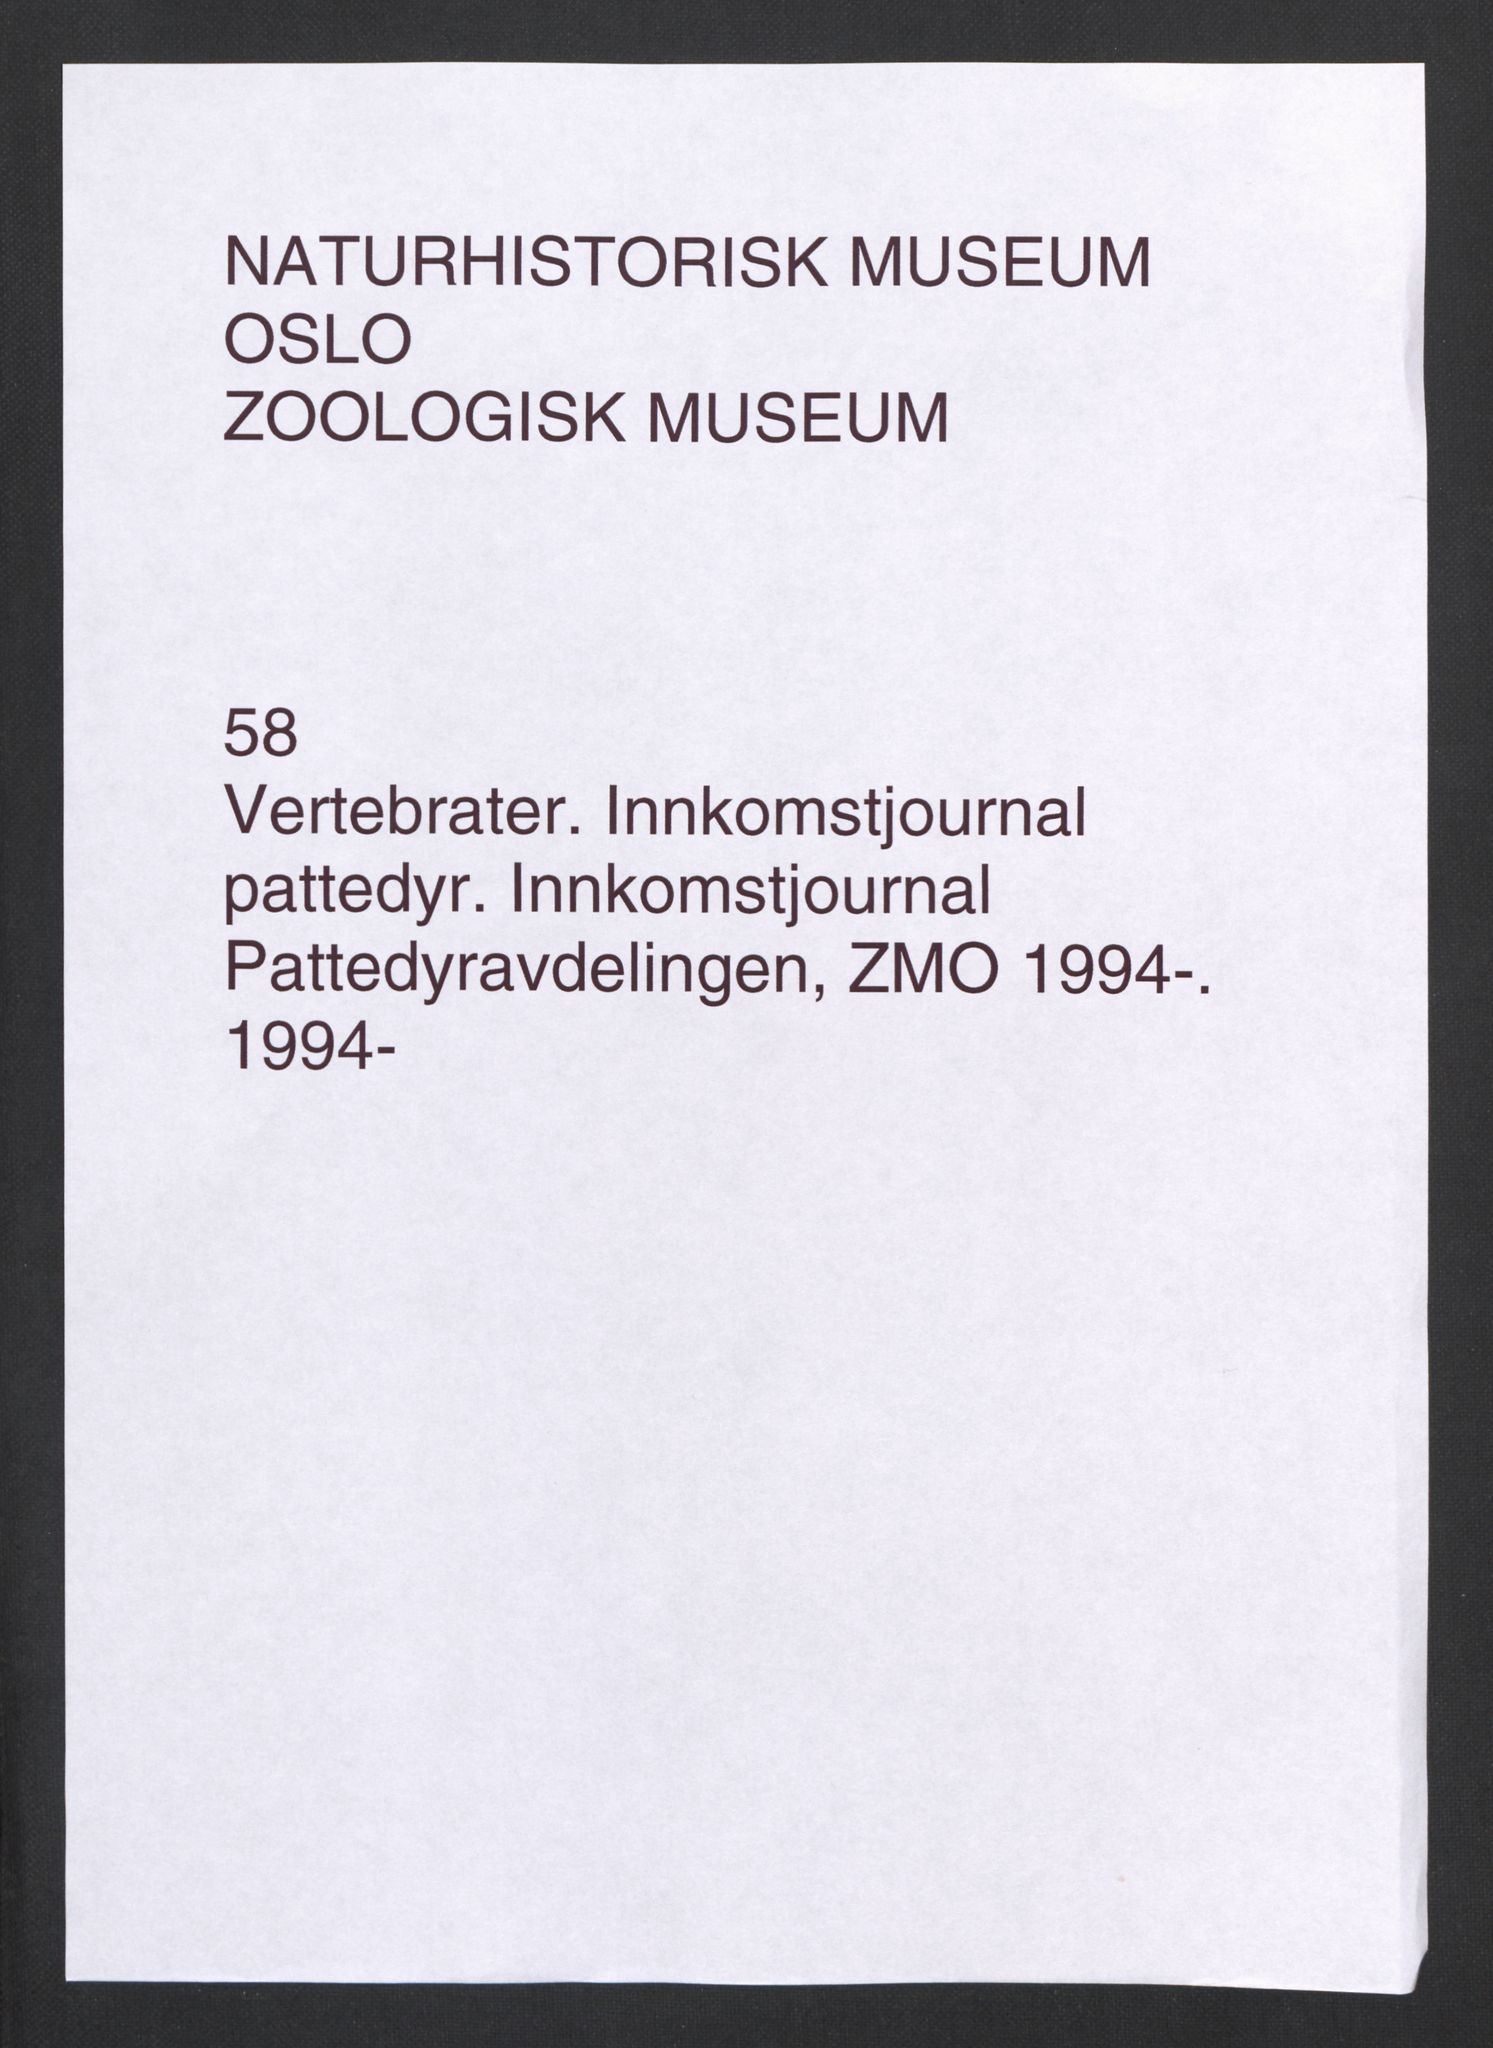 Naturhistorisk museum (Oslo), NHMO/-/4, 1994-2016